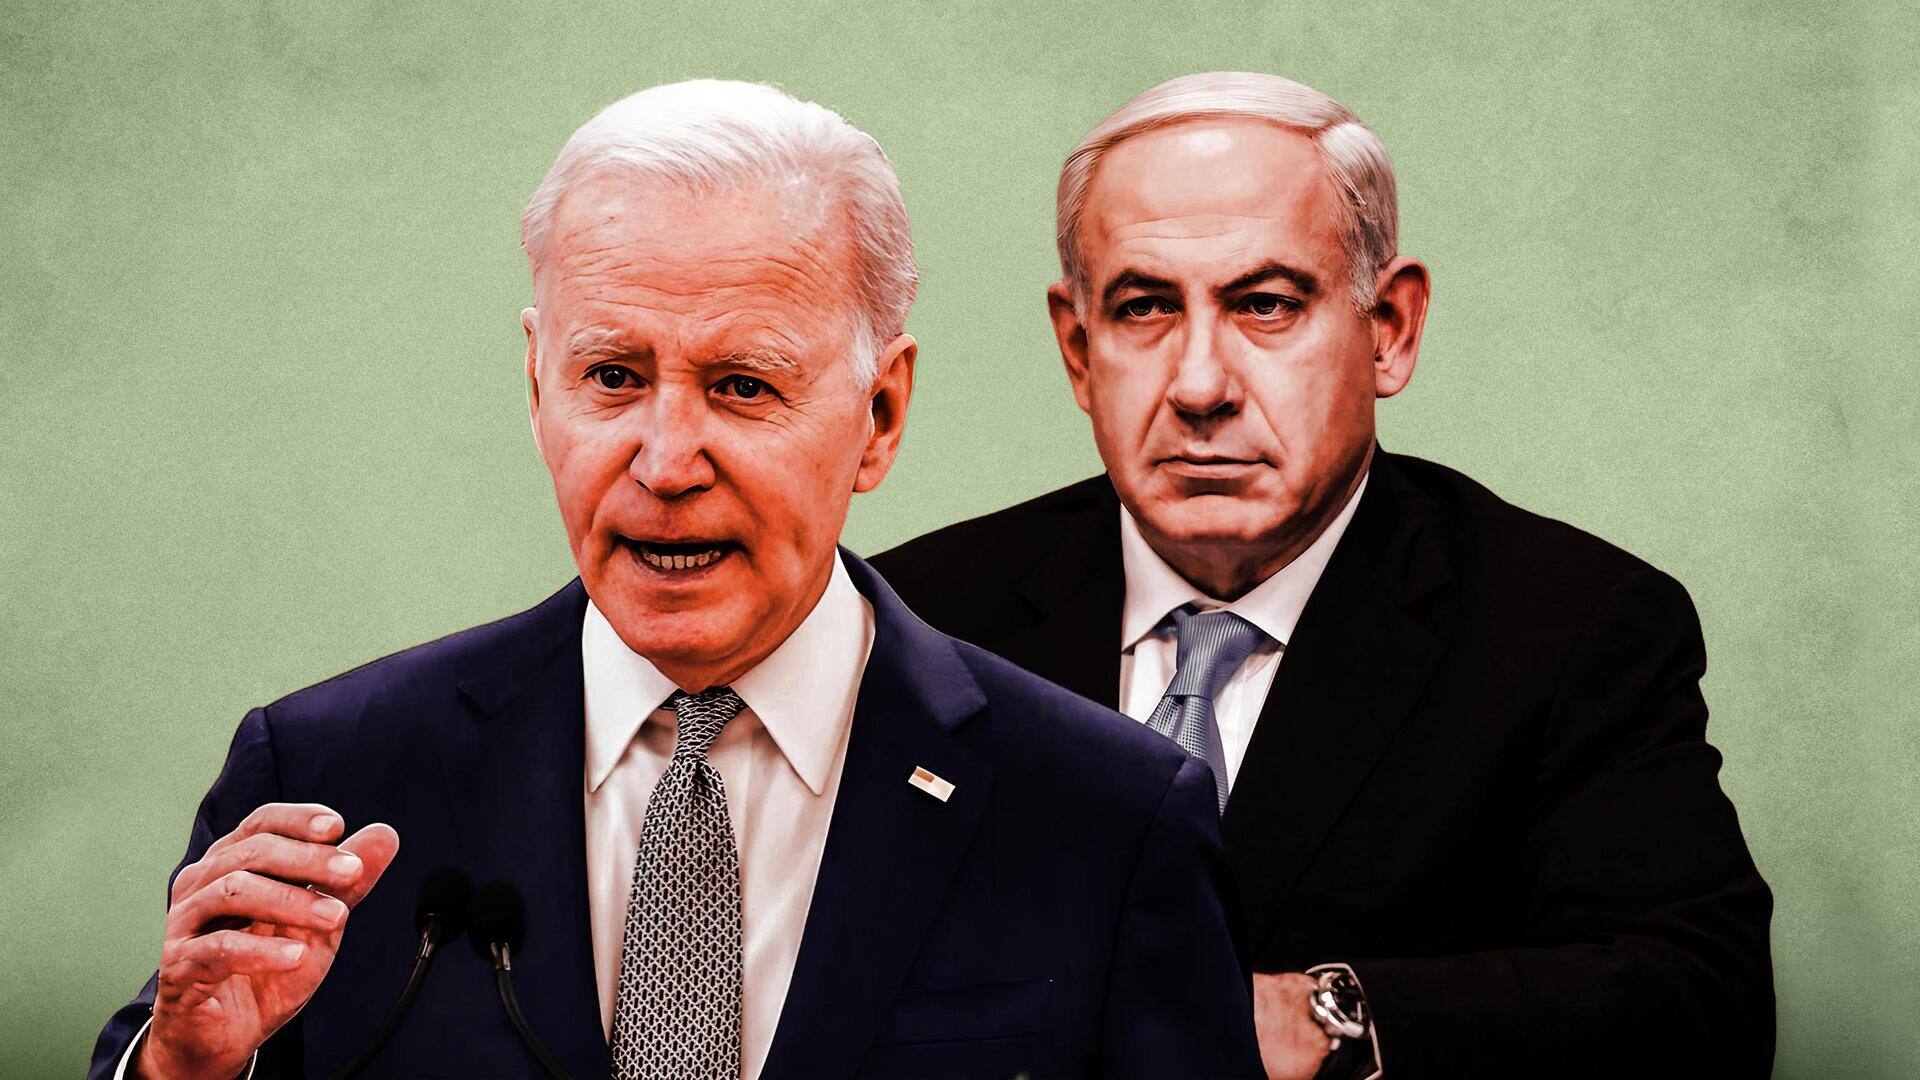 Biden arrives in Israel, meeting with Arab leaders canceled